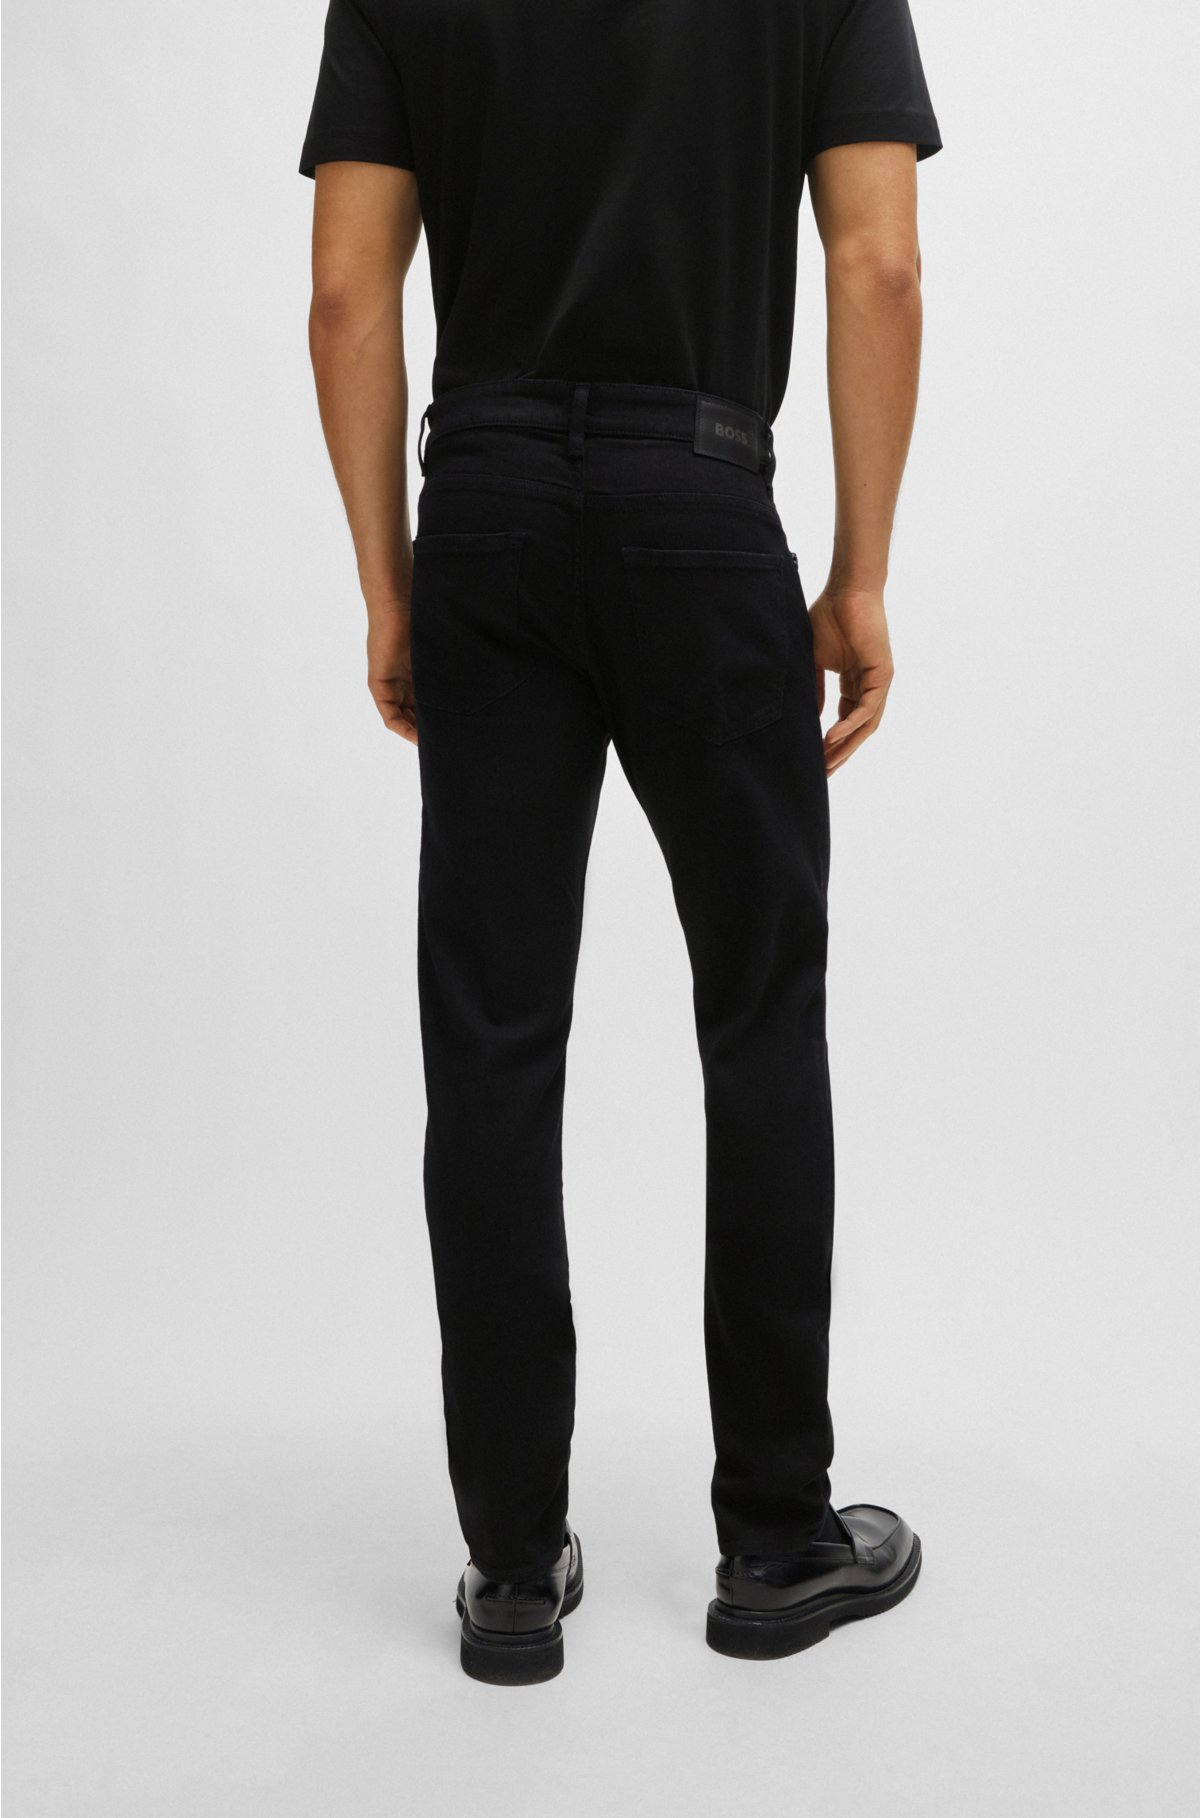 konkurs dart Observere BOSS - Slim-fit jeans in black super-soft Italian denim